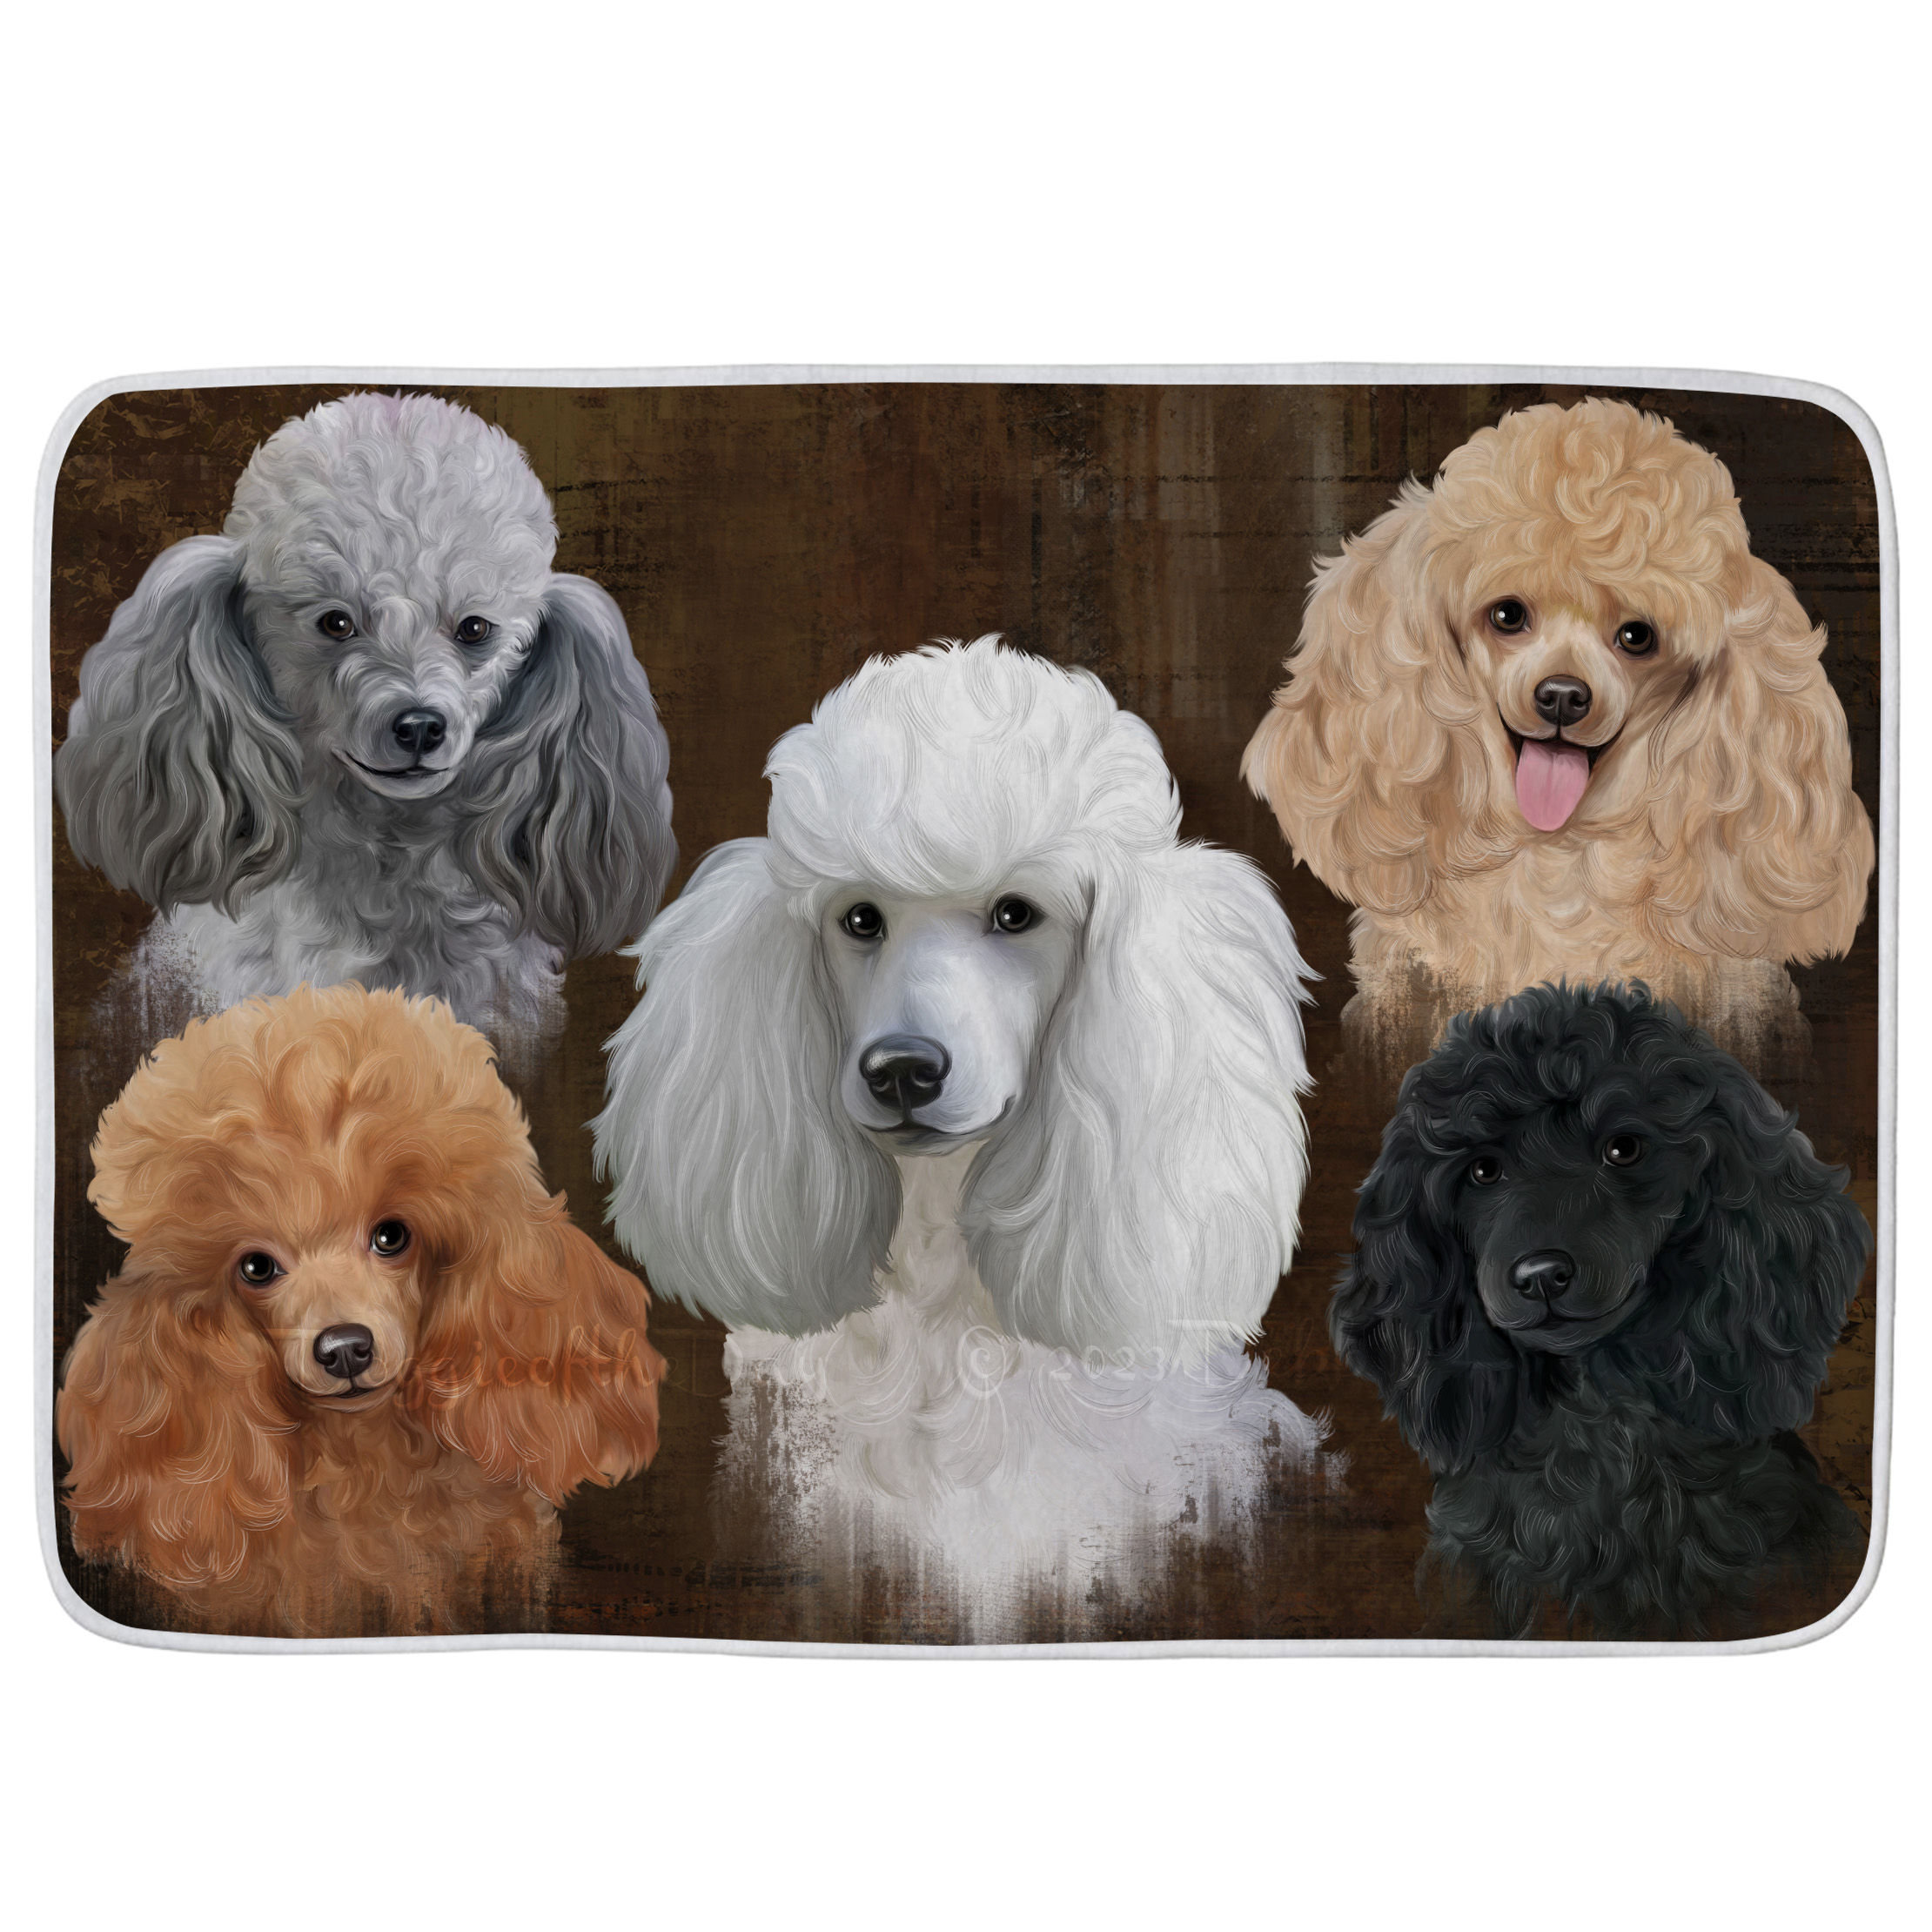 Poodle Dog Bath Mat Anti-Slip Pet Personalized Bathroom Rug Mat Gift NWT